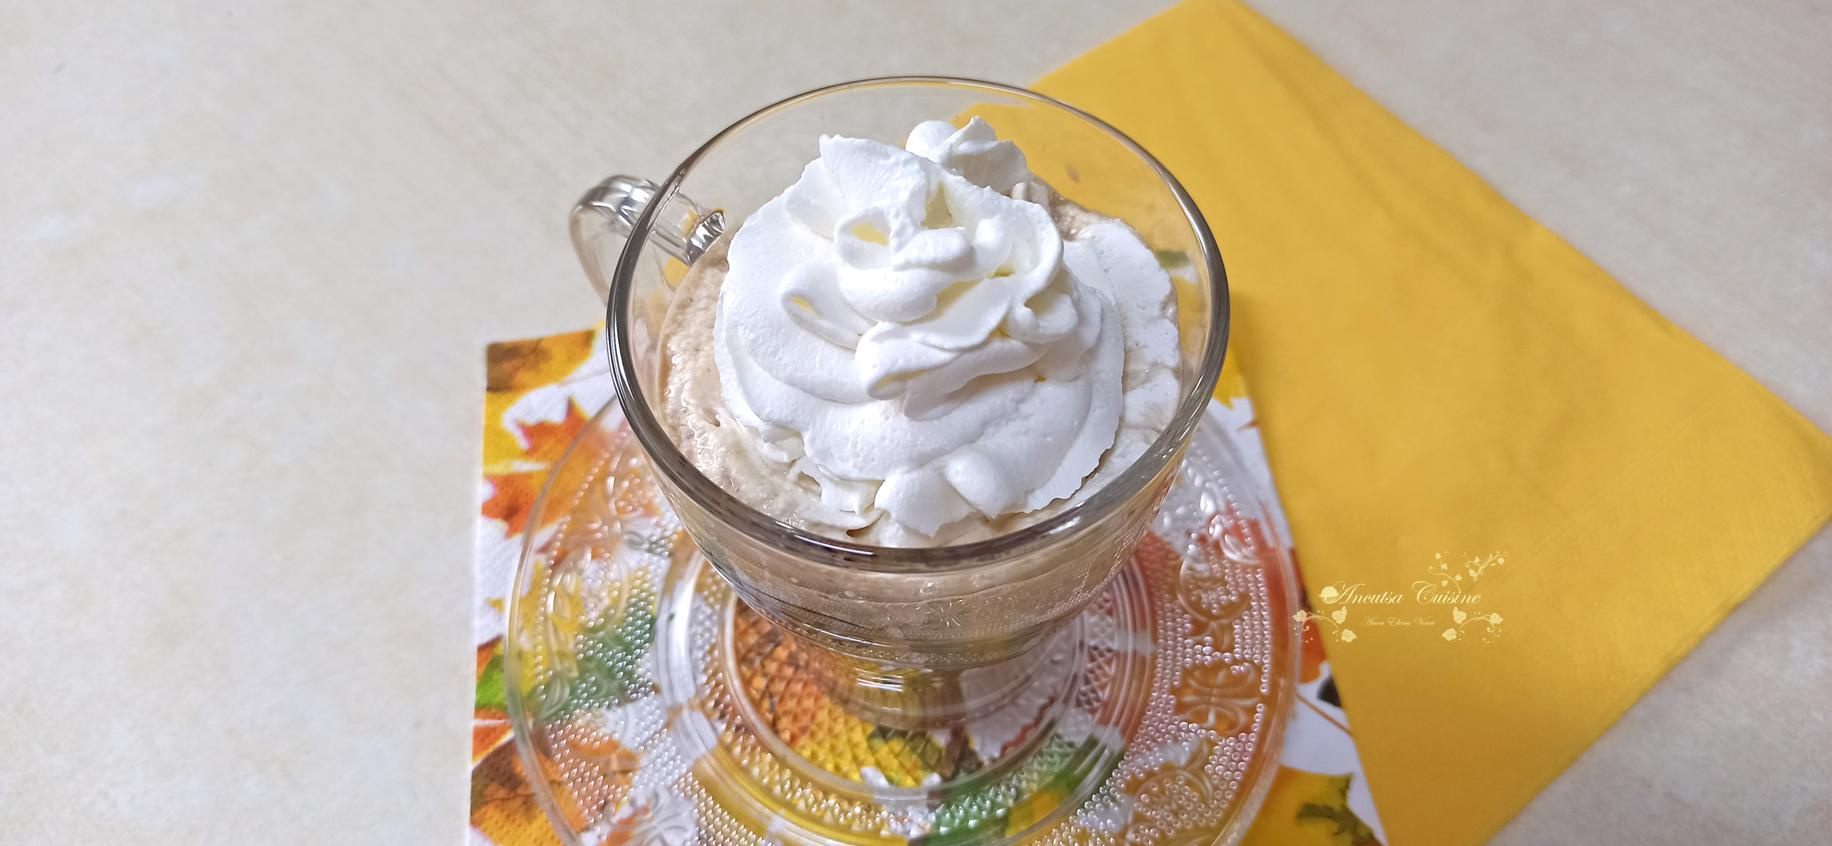 Bautura-desert cu Irish Cream, cafea si frisca